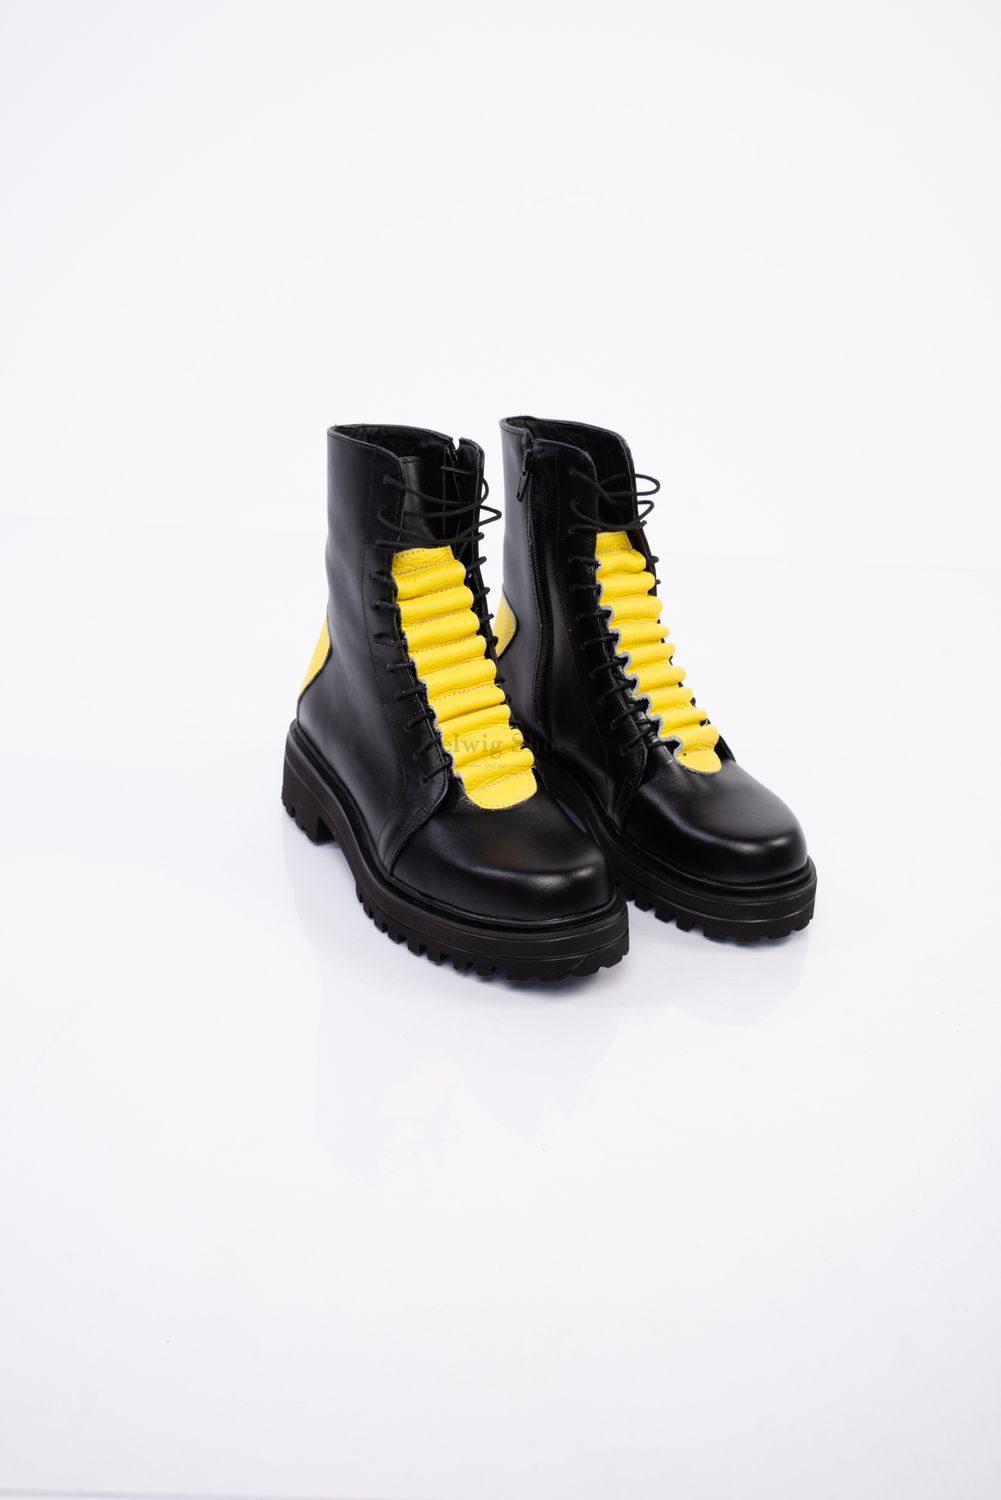 clone teens somewhat Ghete negre din piele naturala cu aplicatii colorate | Helwig Shoes